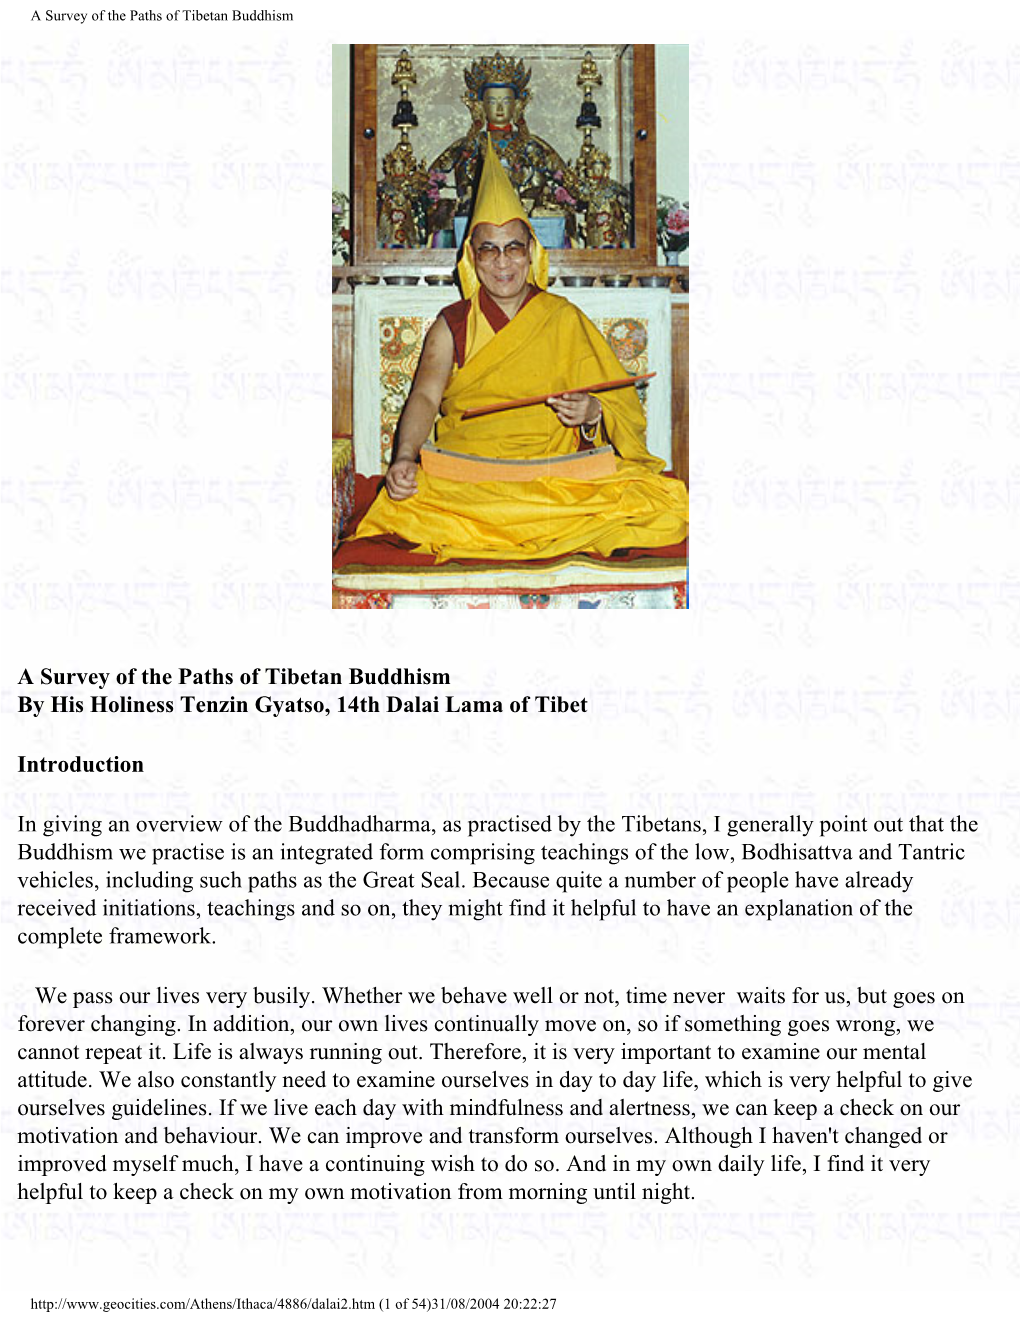 A Survey of the Paths of Tibetan Buddhism by Dalai Lama